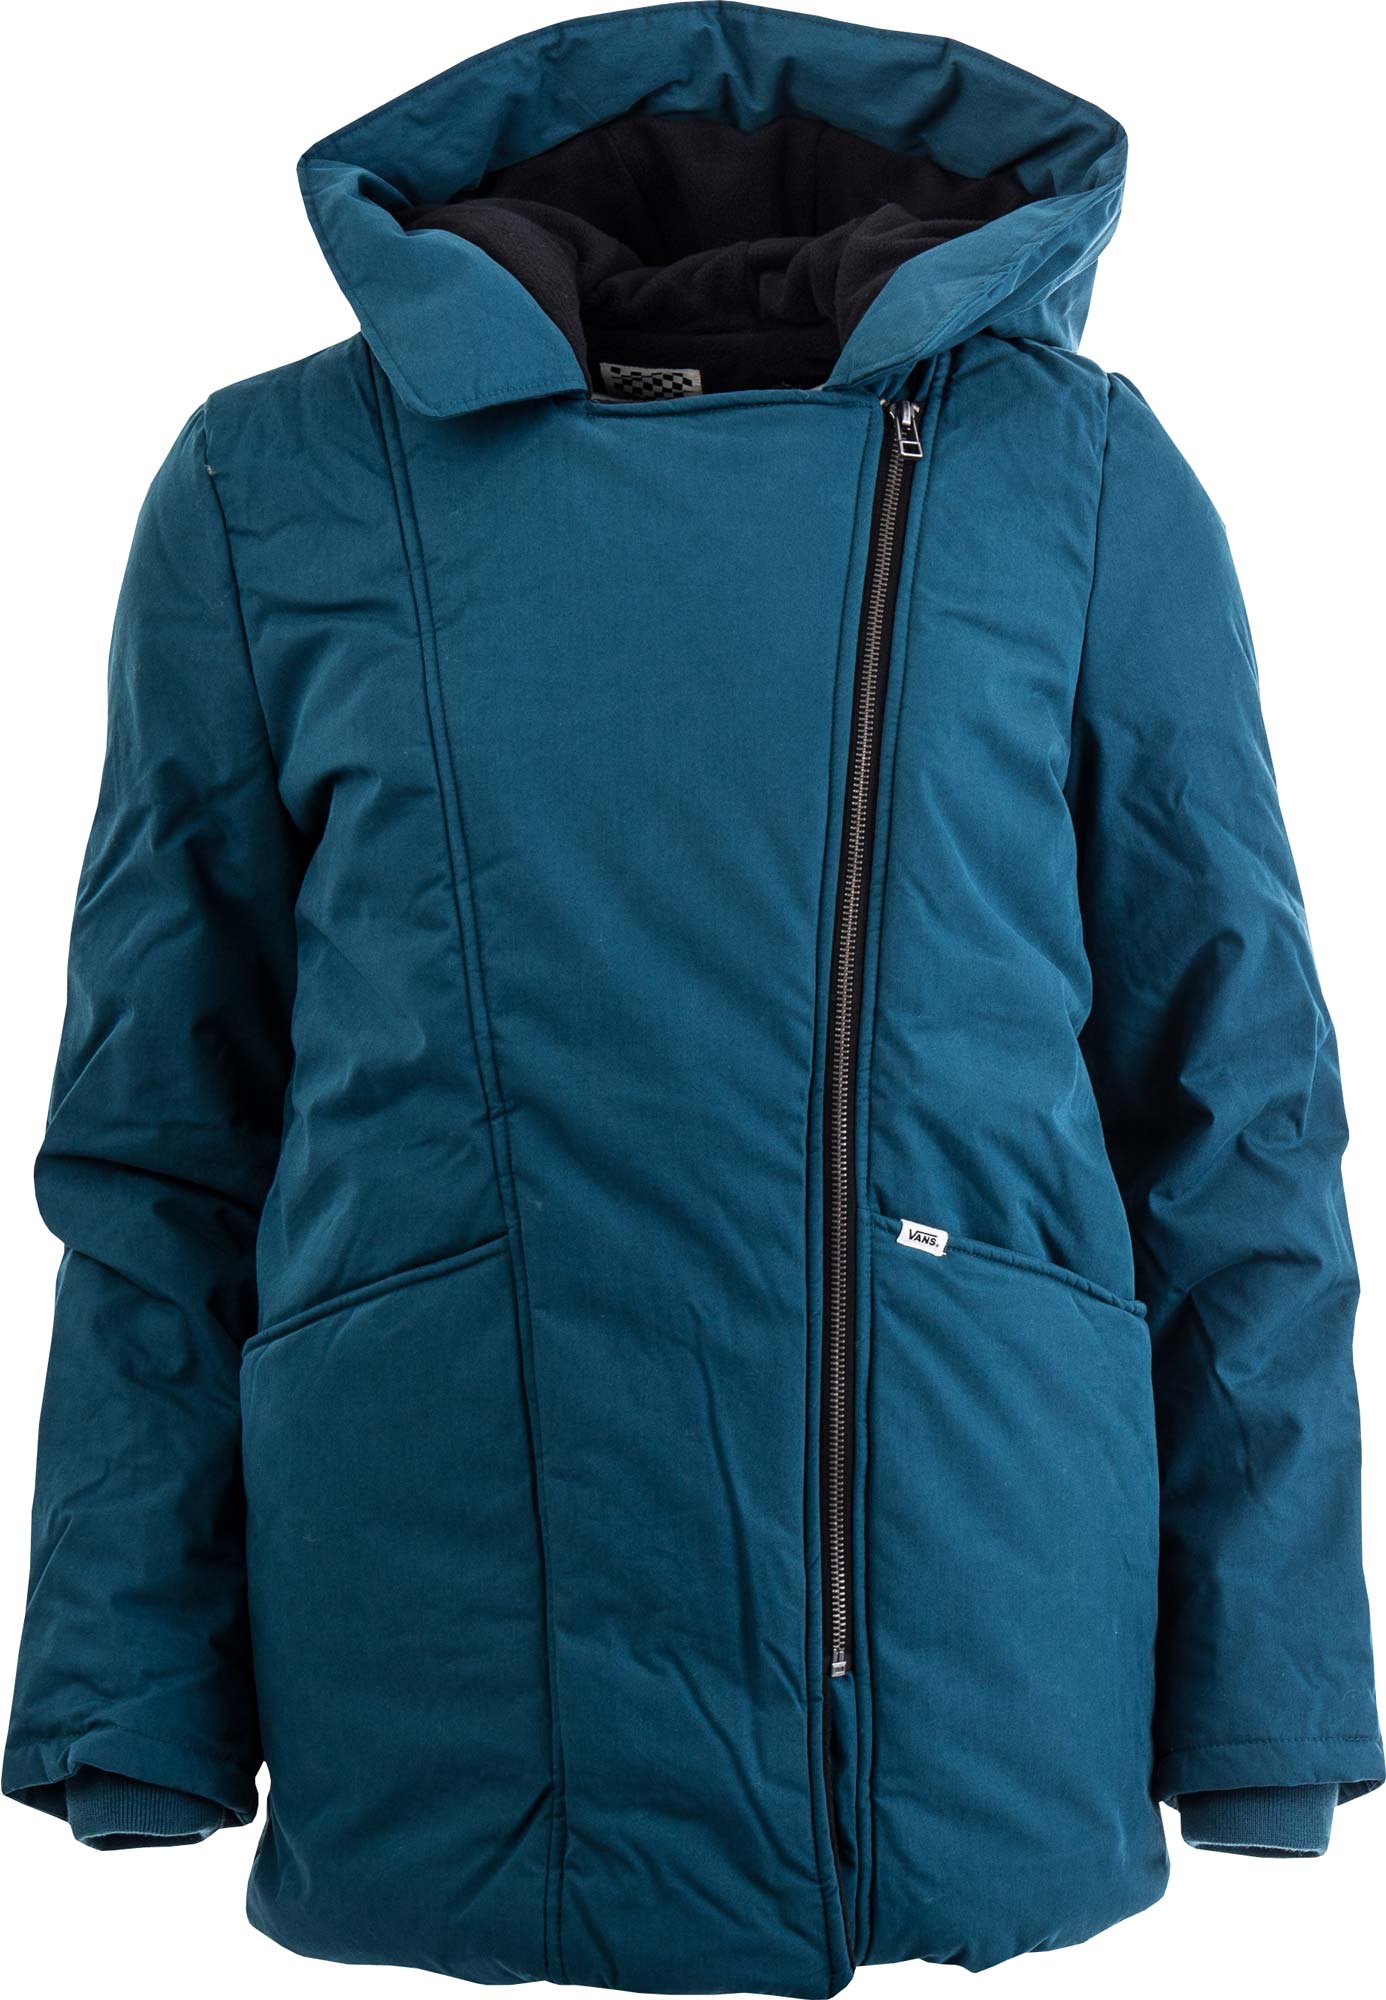 WHEELER PUFFER - Stylish winter jacket